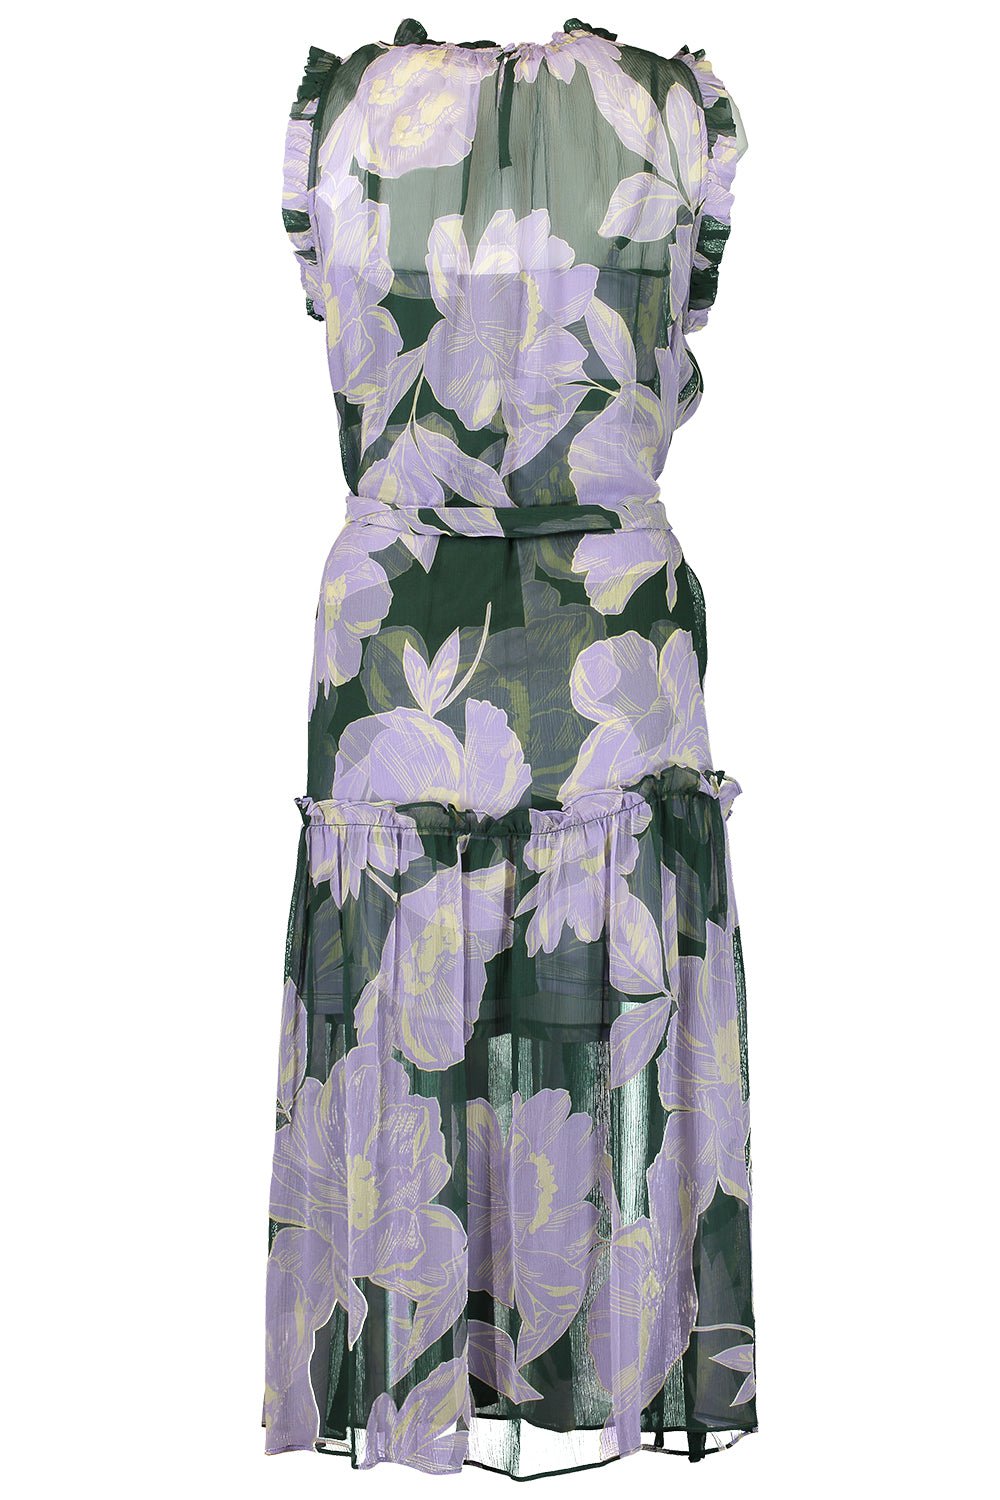 CHRISTY LYNN-Gemma Dress - Green Blossom-